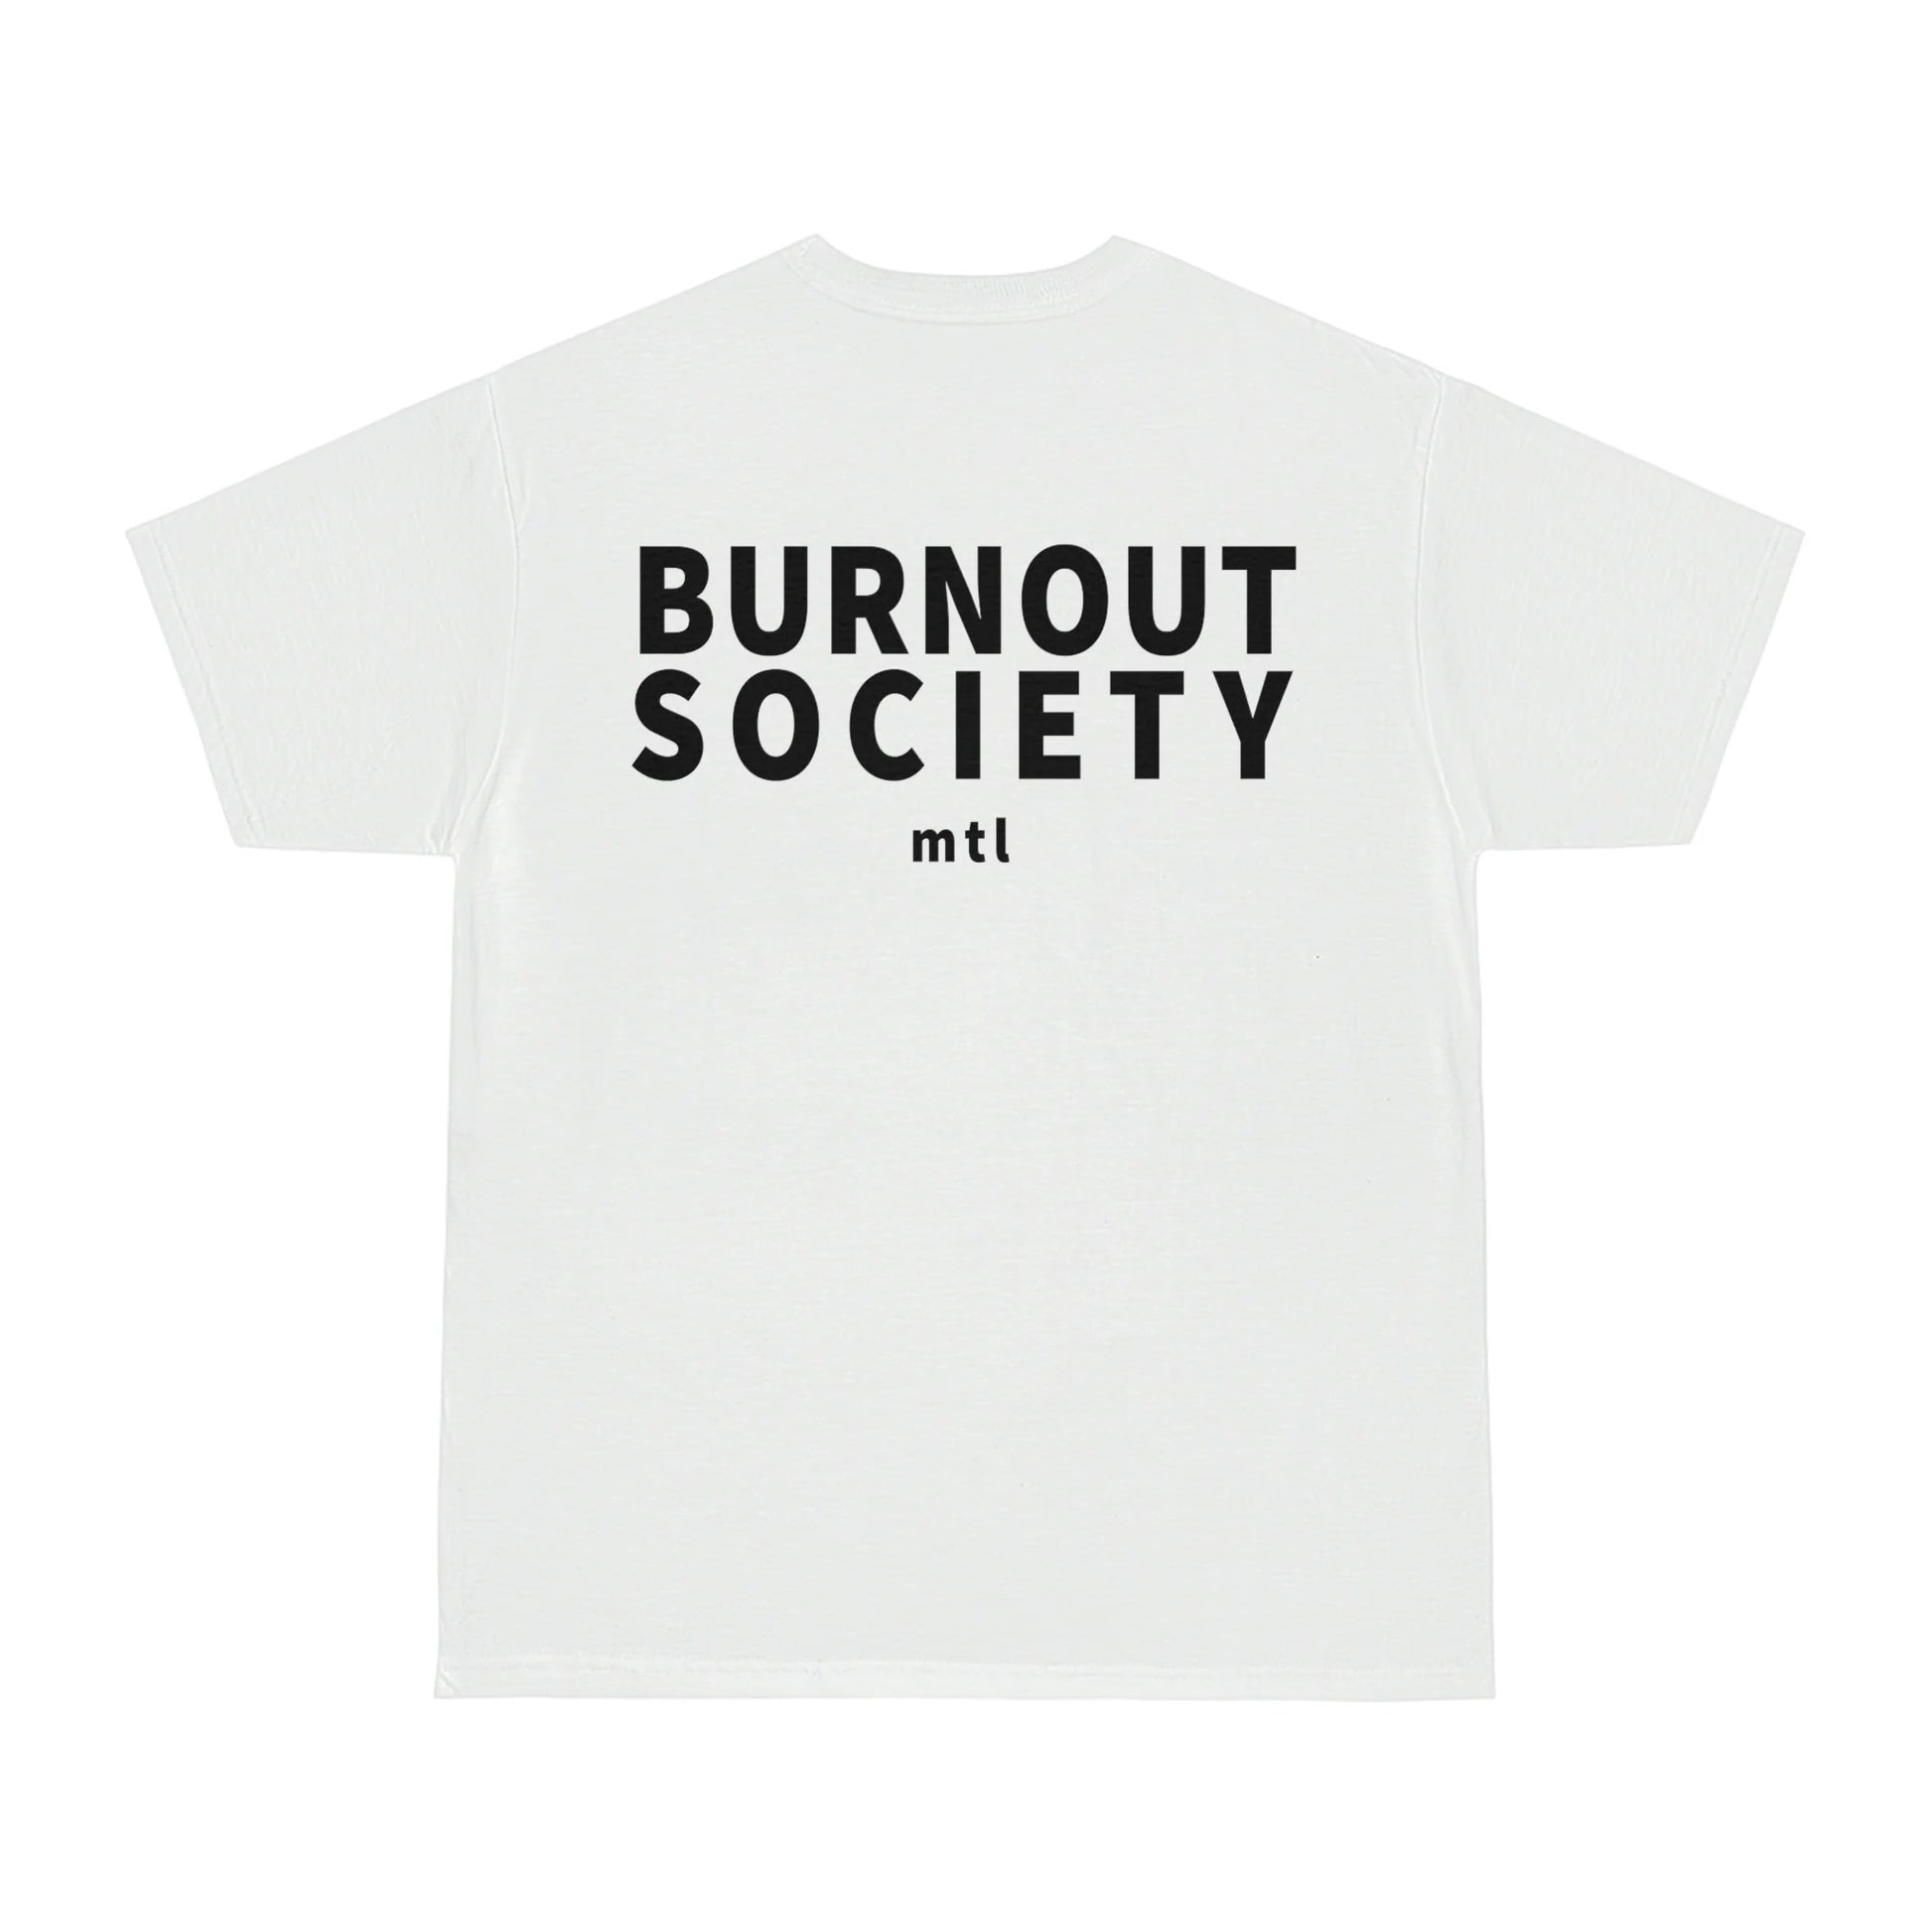 BURNOUT SOCIETY